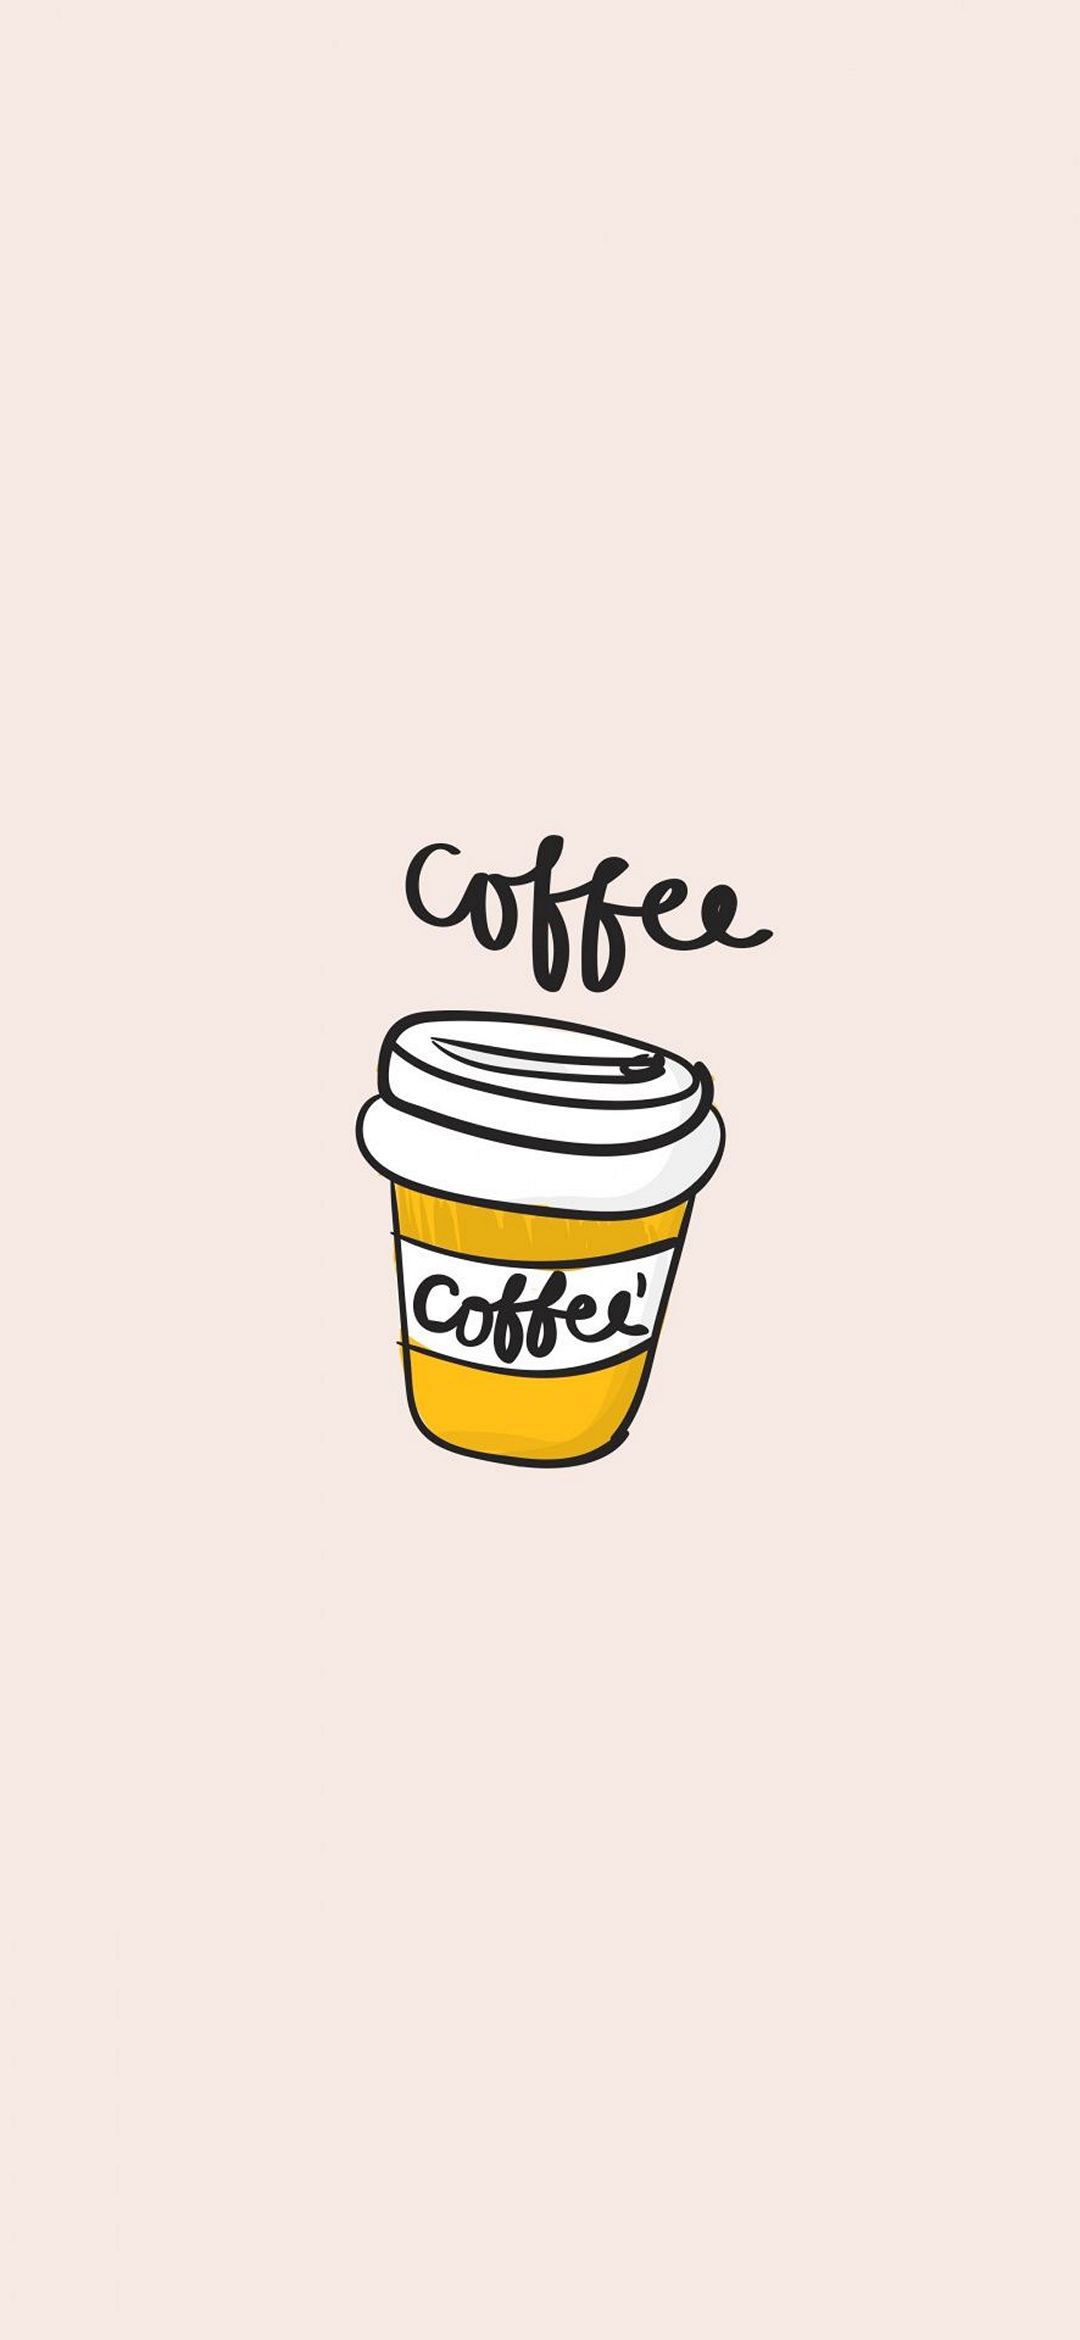 Coffee Cup Clip Art Minimal iPhone Wallpaper Download